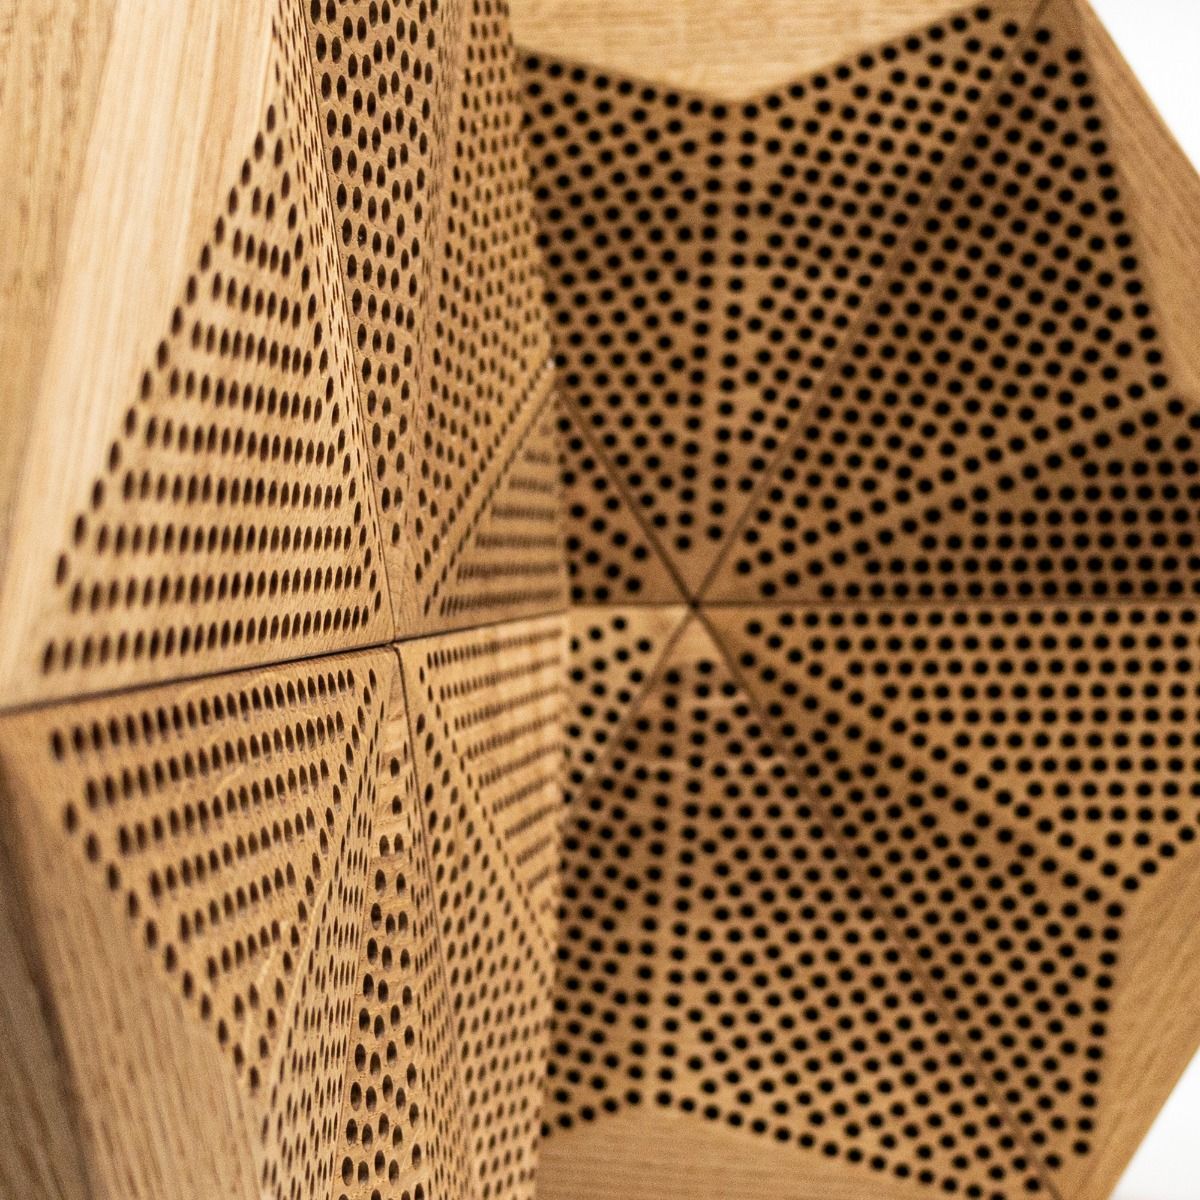 INSONORIZACIÓN DECORATIVA Azulejo Panel acústico Panel absorbente de sonido  Amortiguación de sonido Aislamiento acústico Bloquear ruido Arte de pared  hexagonal Fácil bricolaje -  México